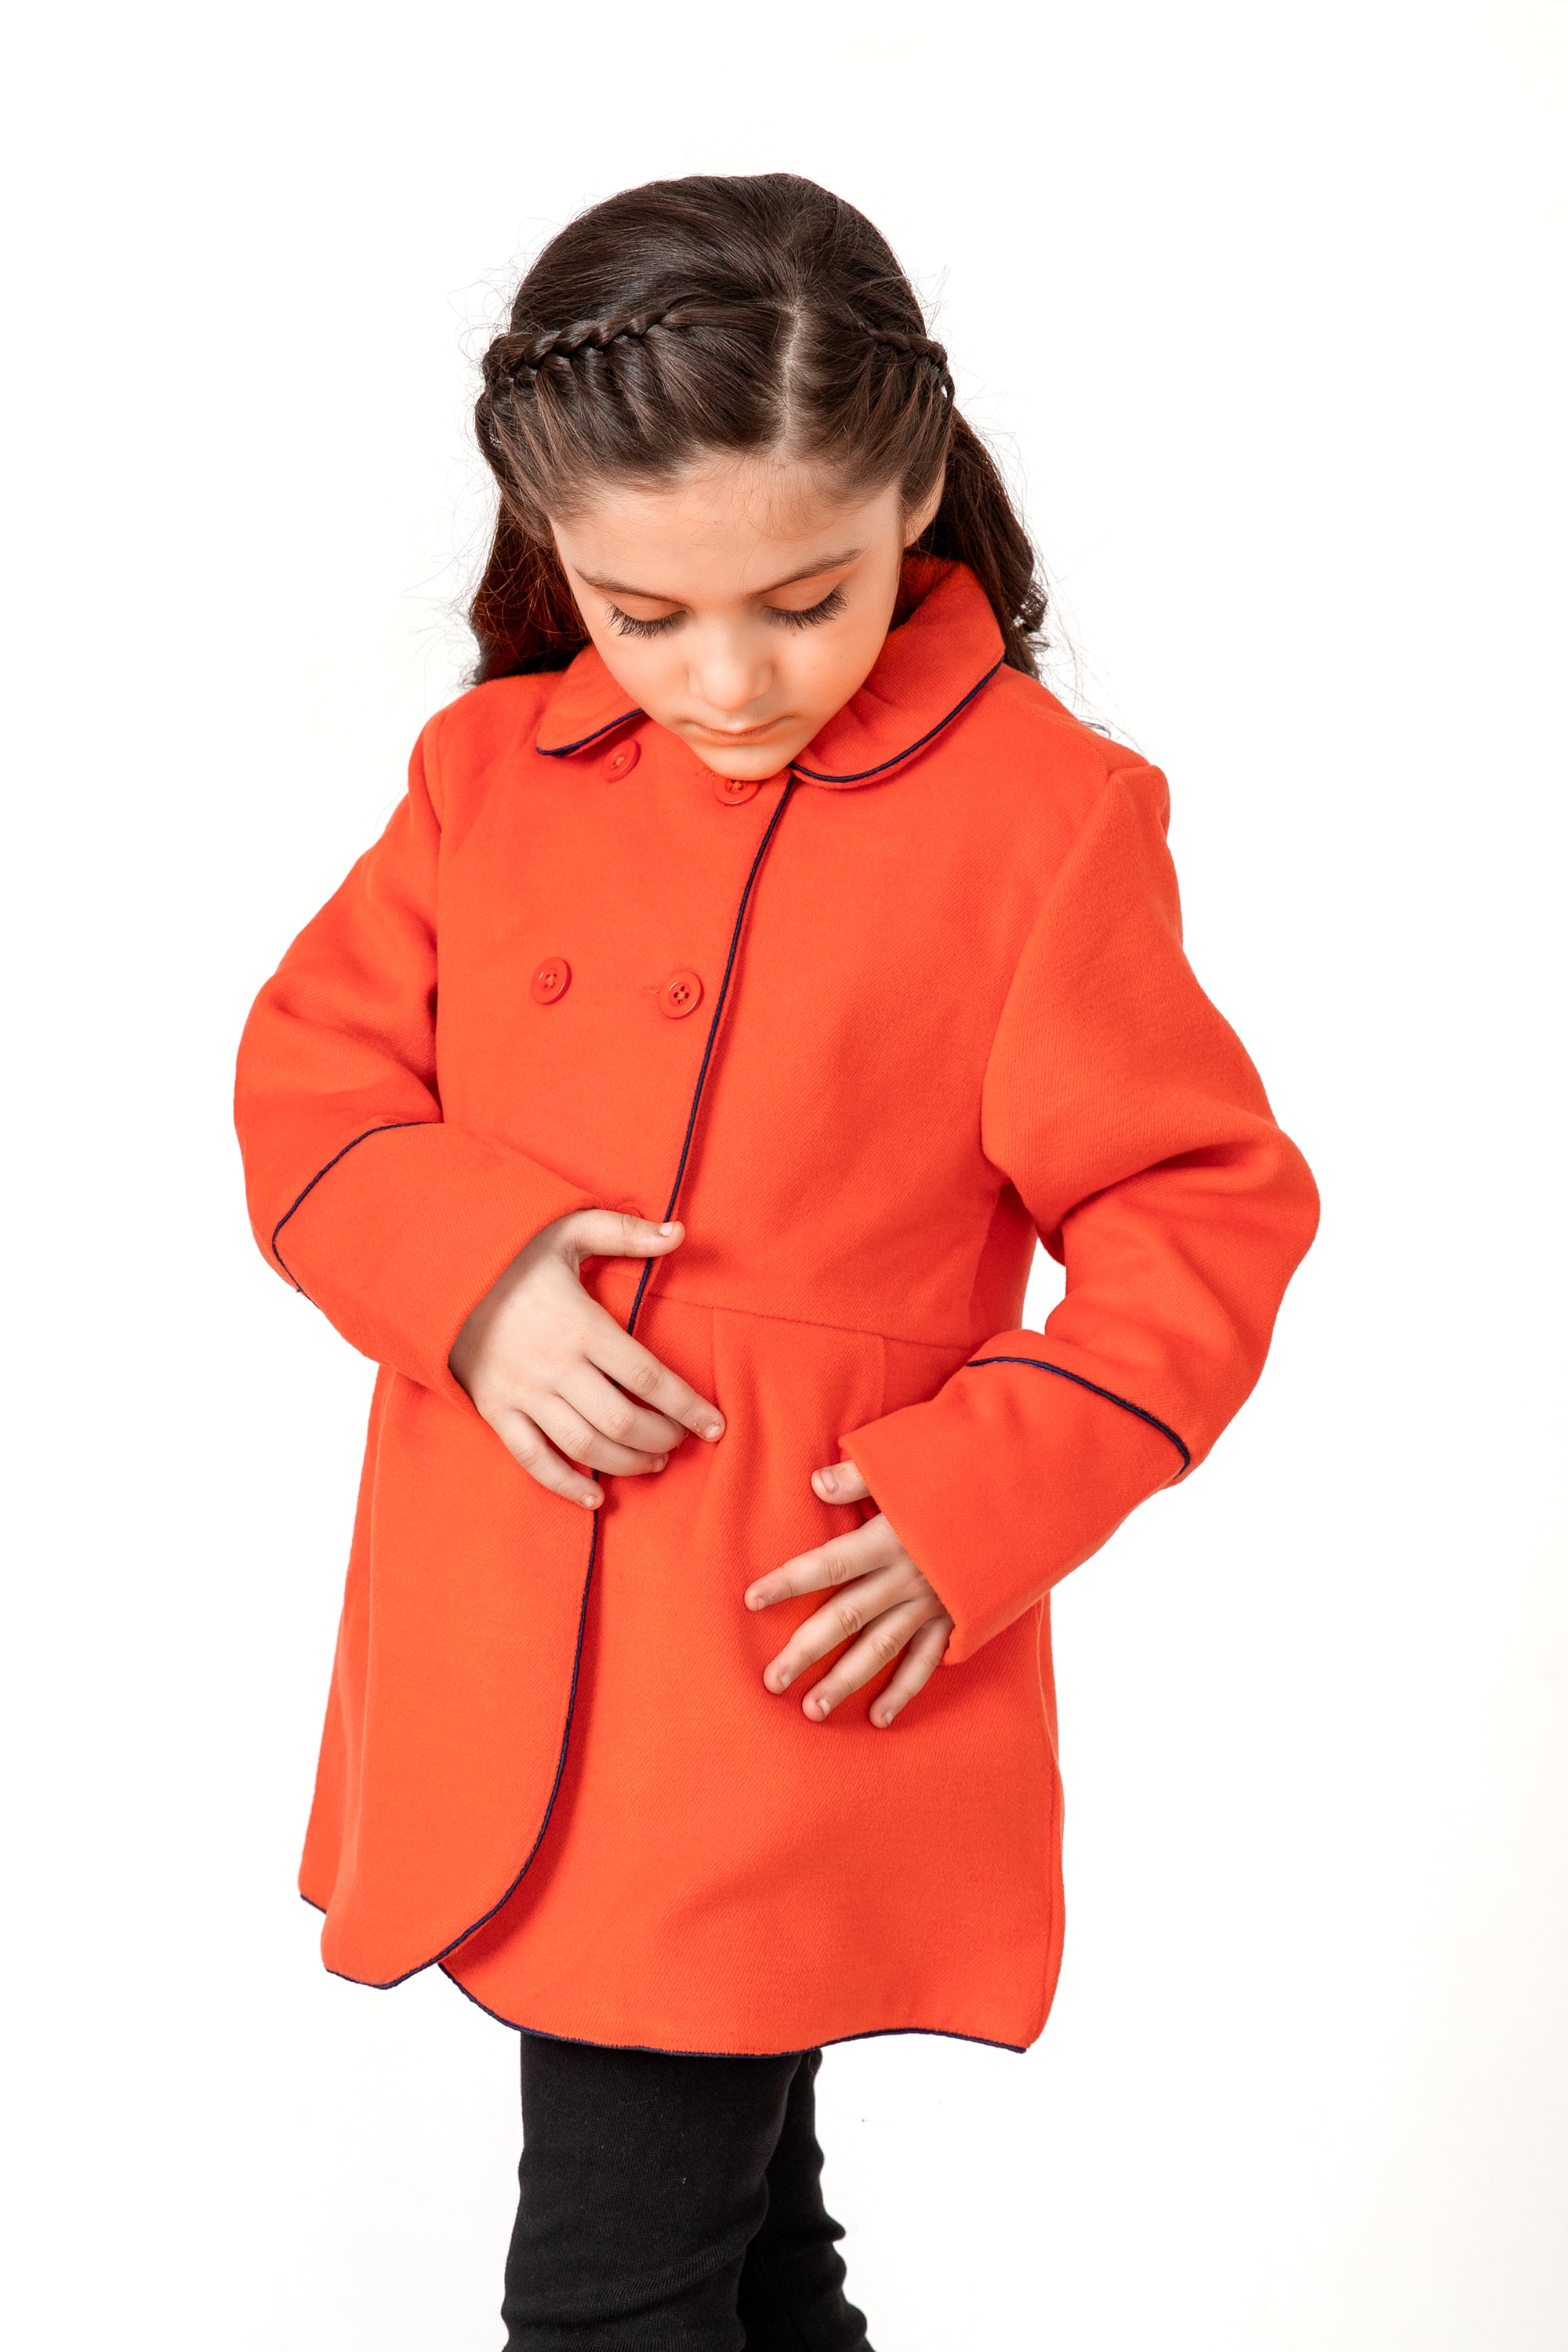 Girls Orange Pea Coat